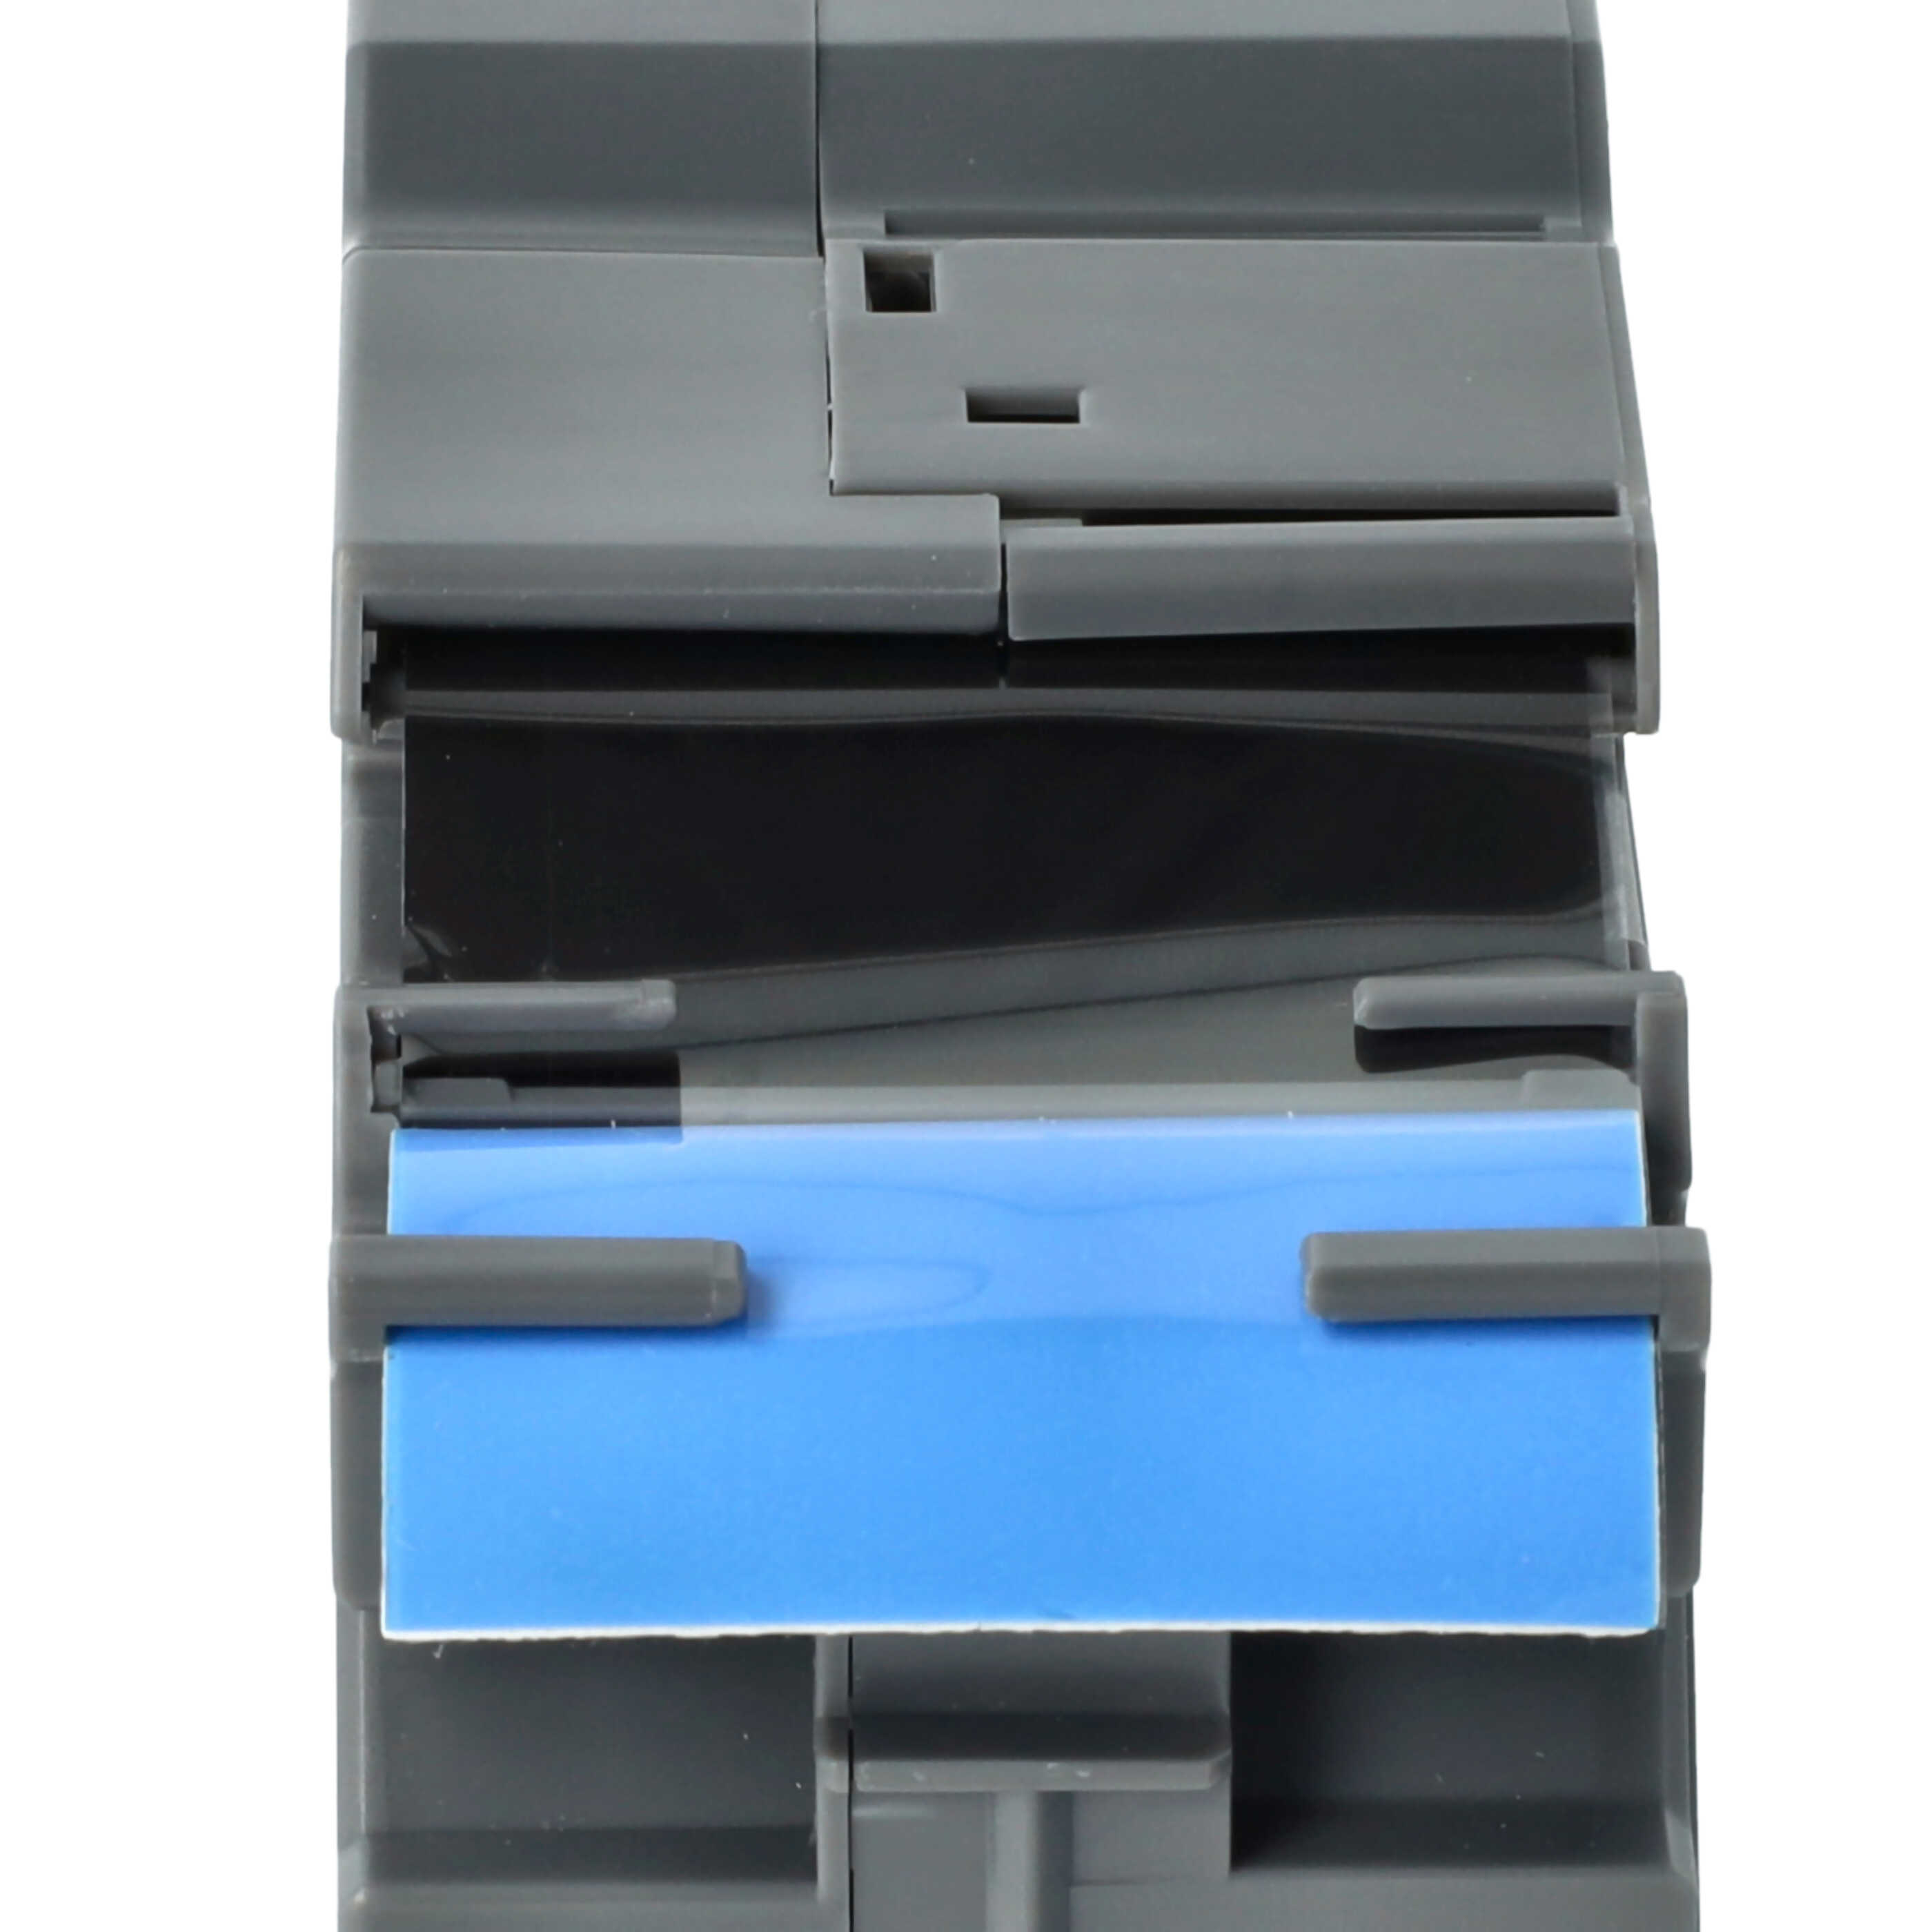 Casete cinta escritura reemplaza Brother TZE-561, TZ-561 Negro su Azul